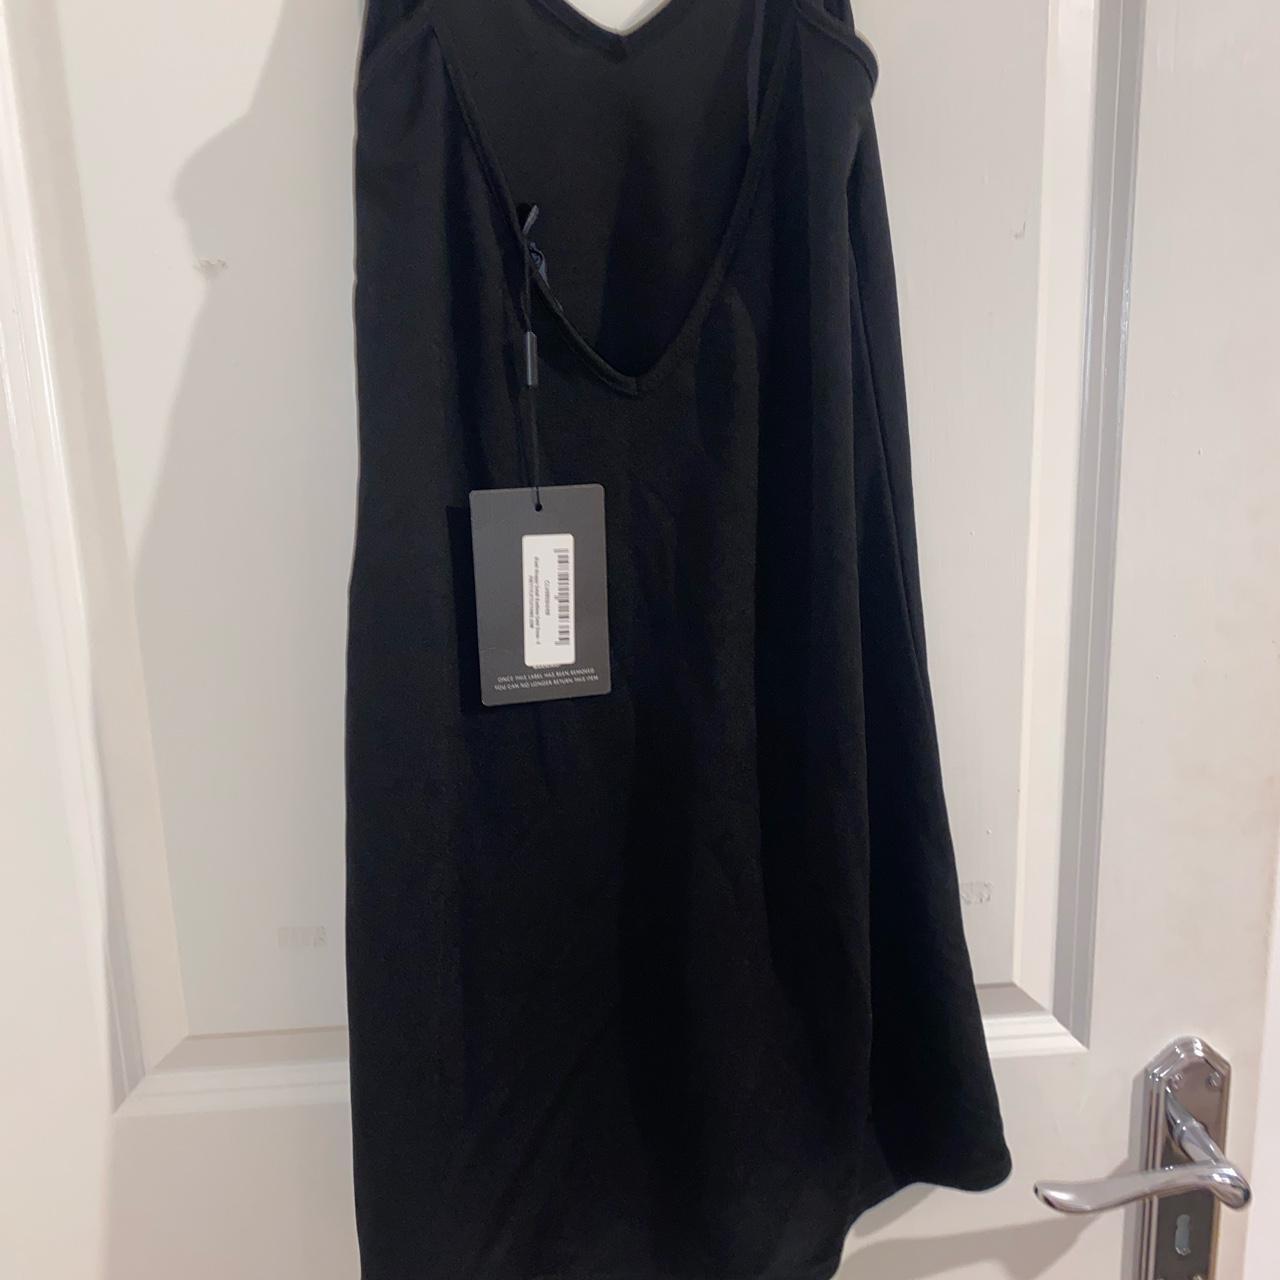 Black Strappy Detail Backless Cami Dress